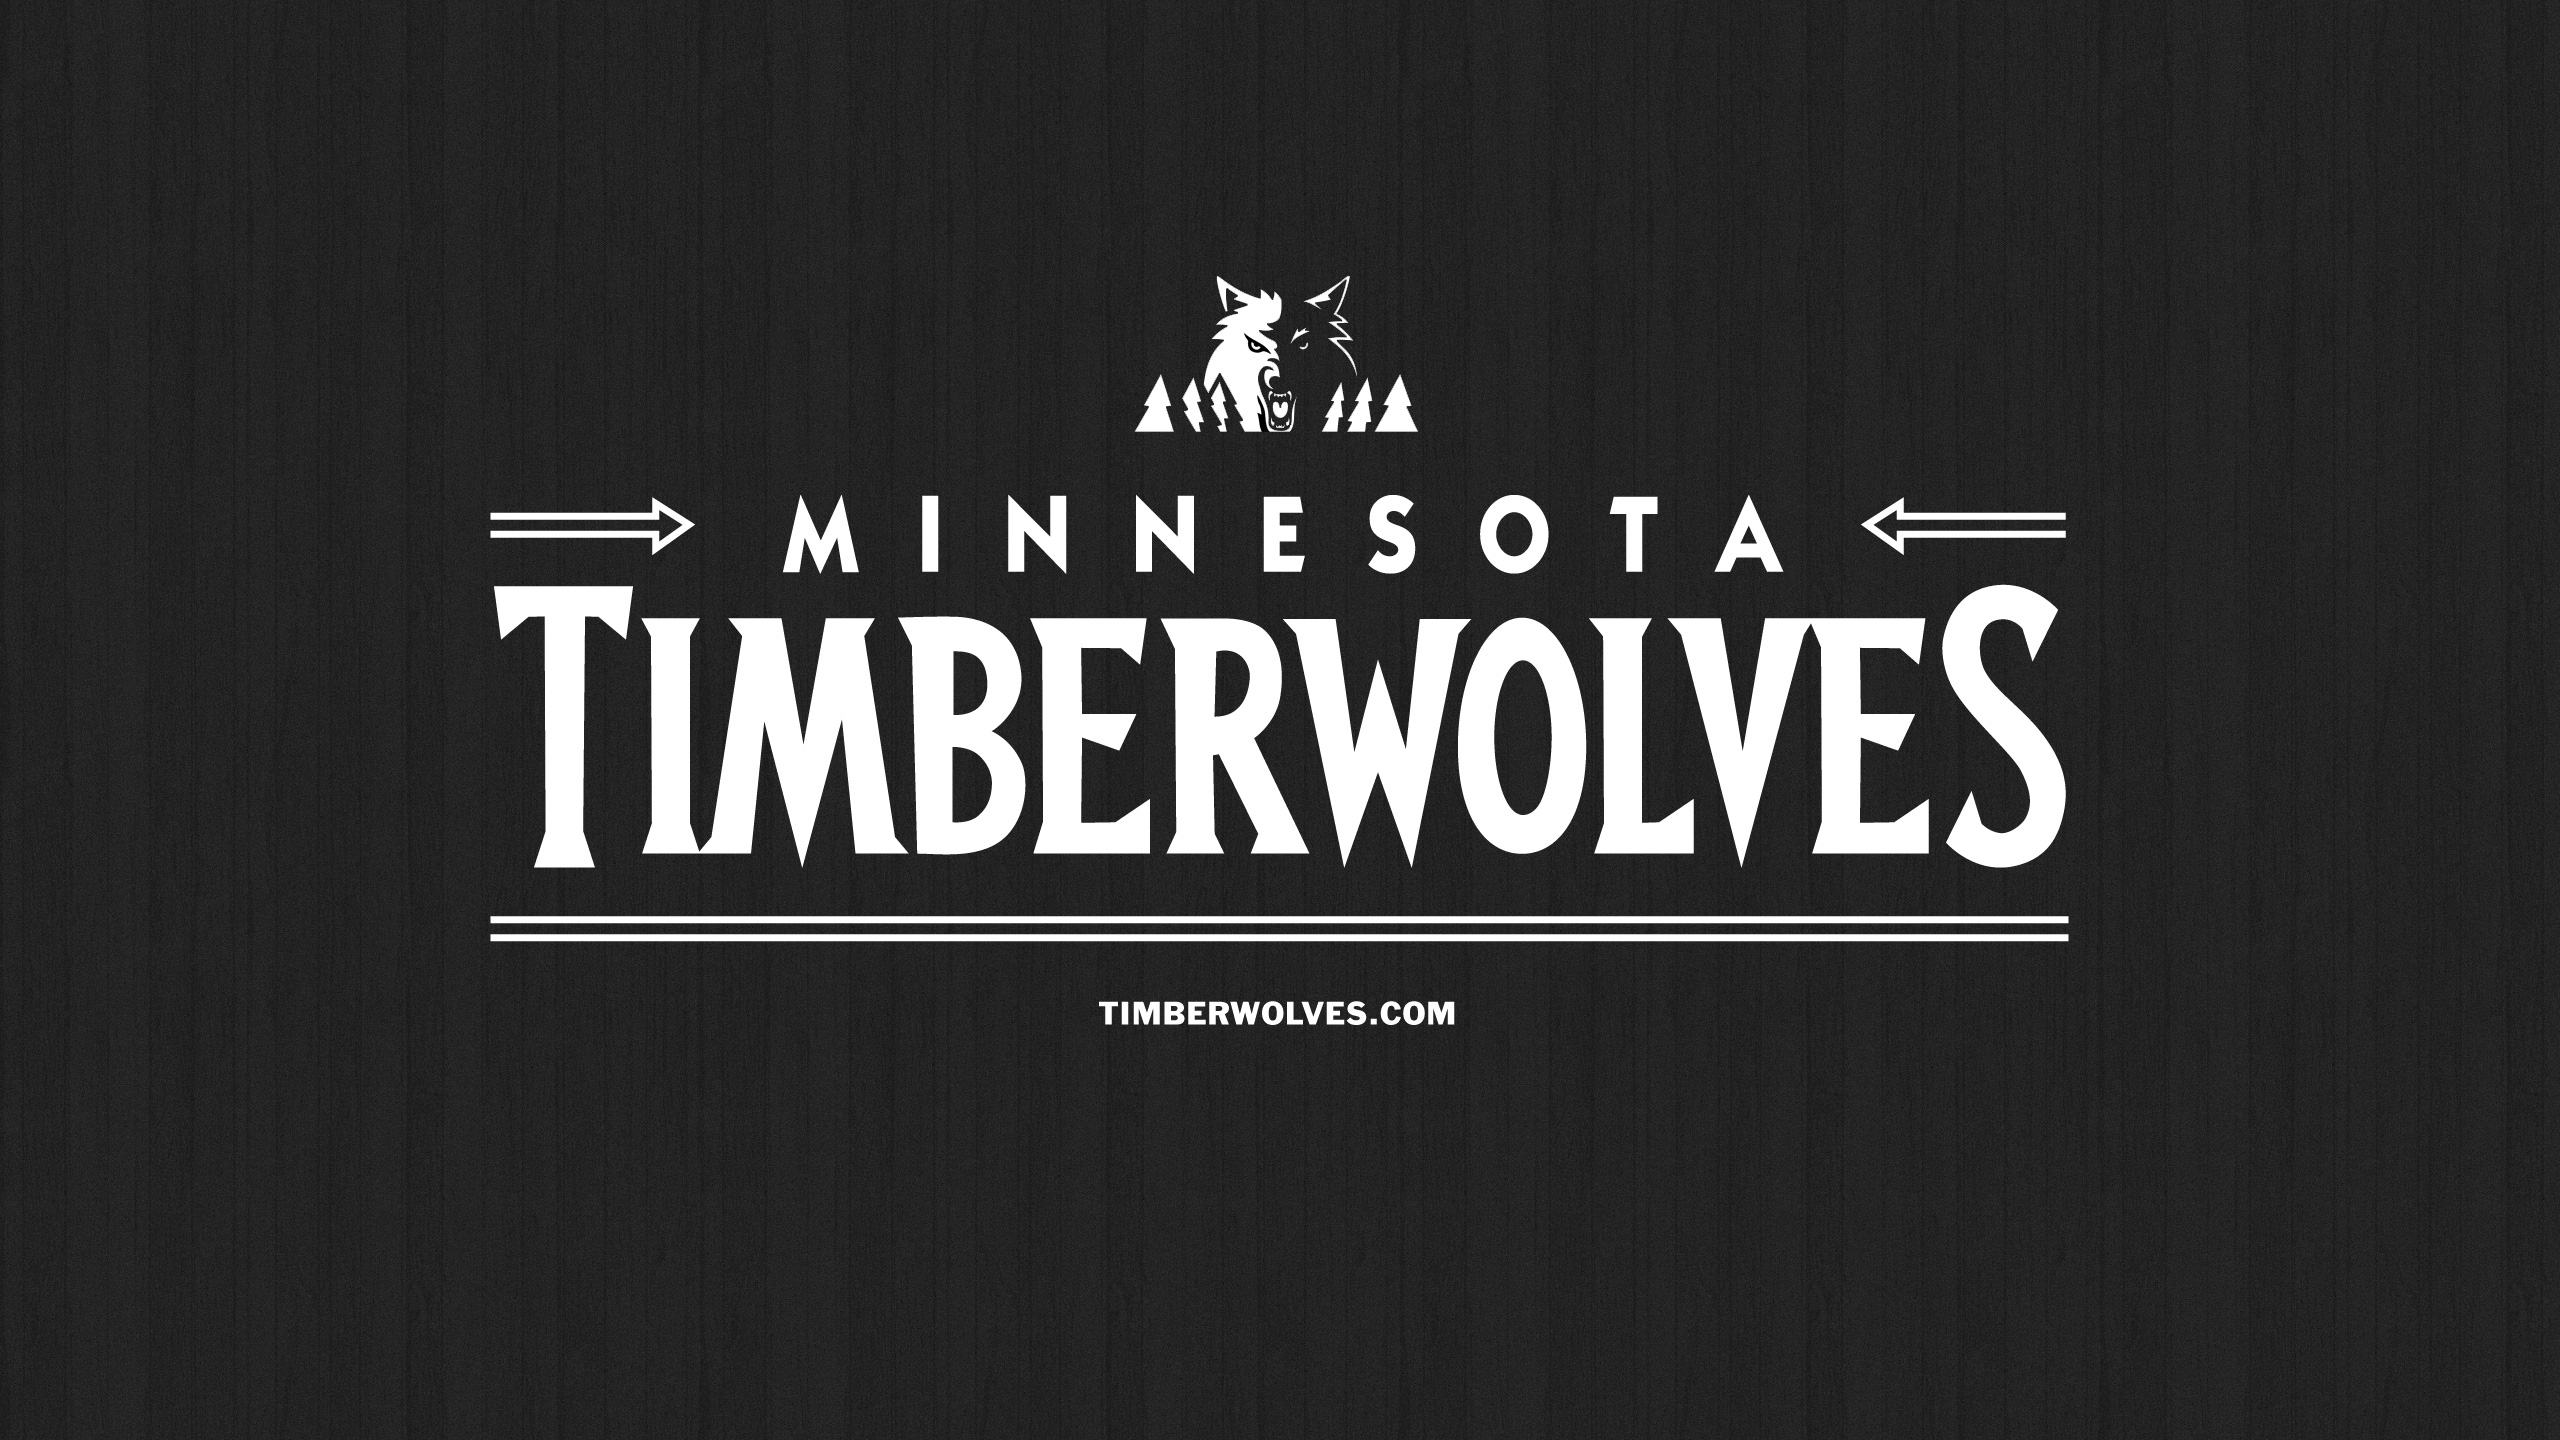 Wonderful Minnesota Timberwolves Wallpaper Full HD Pictures